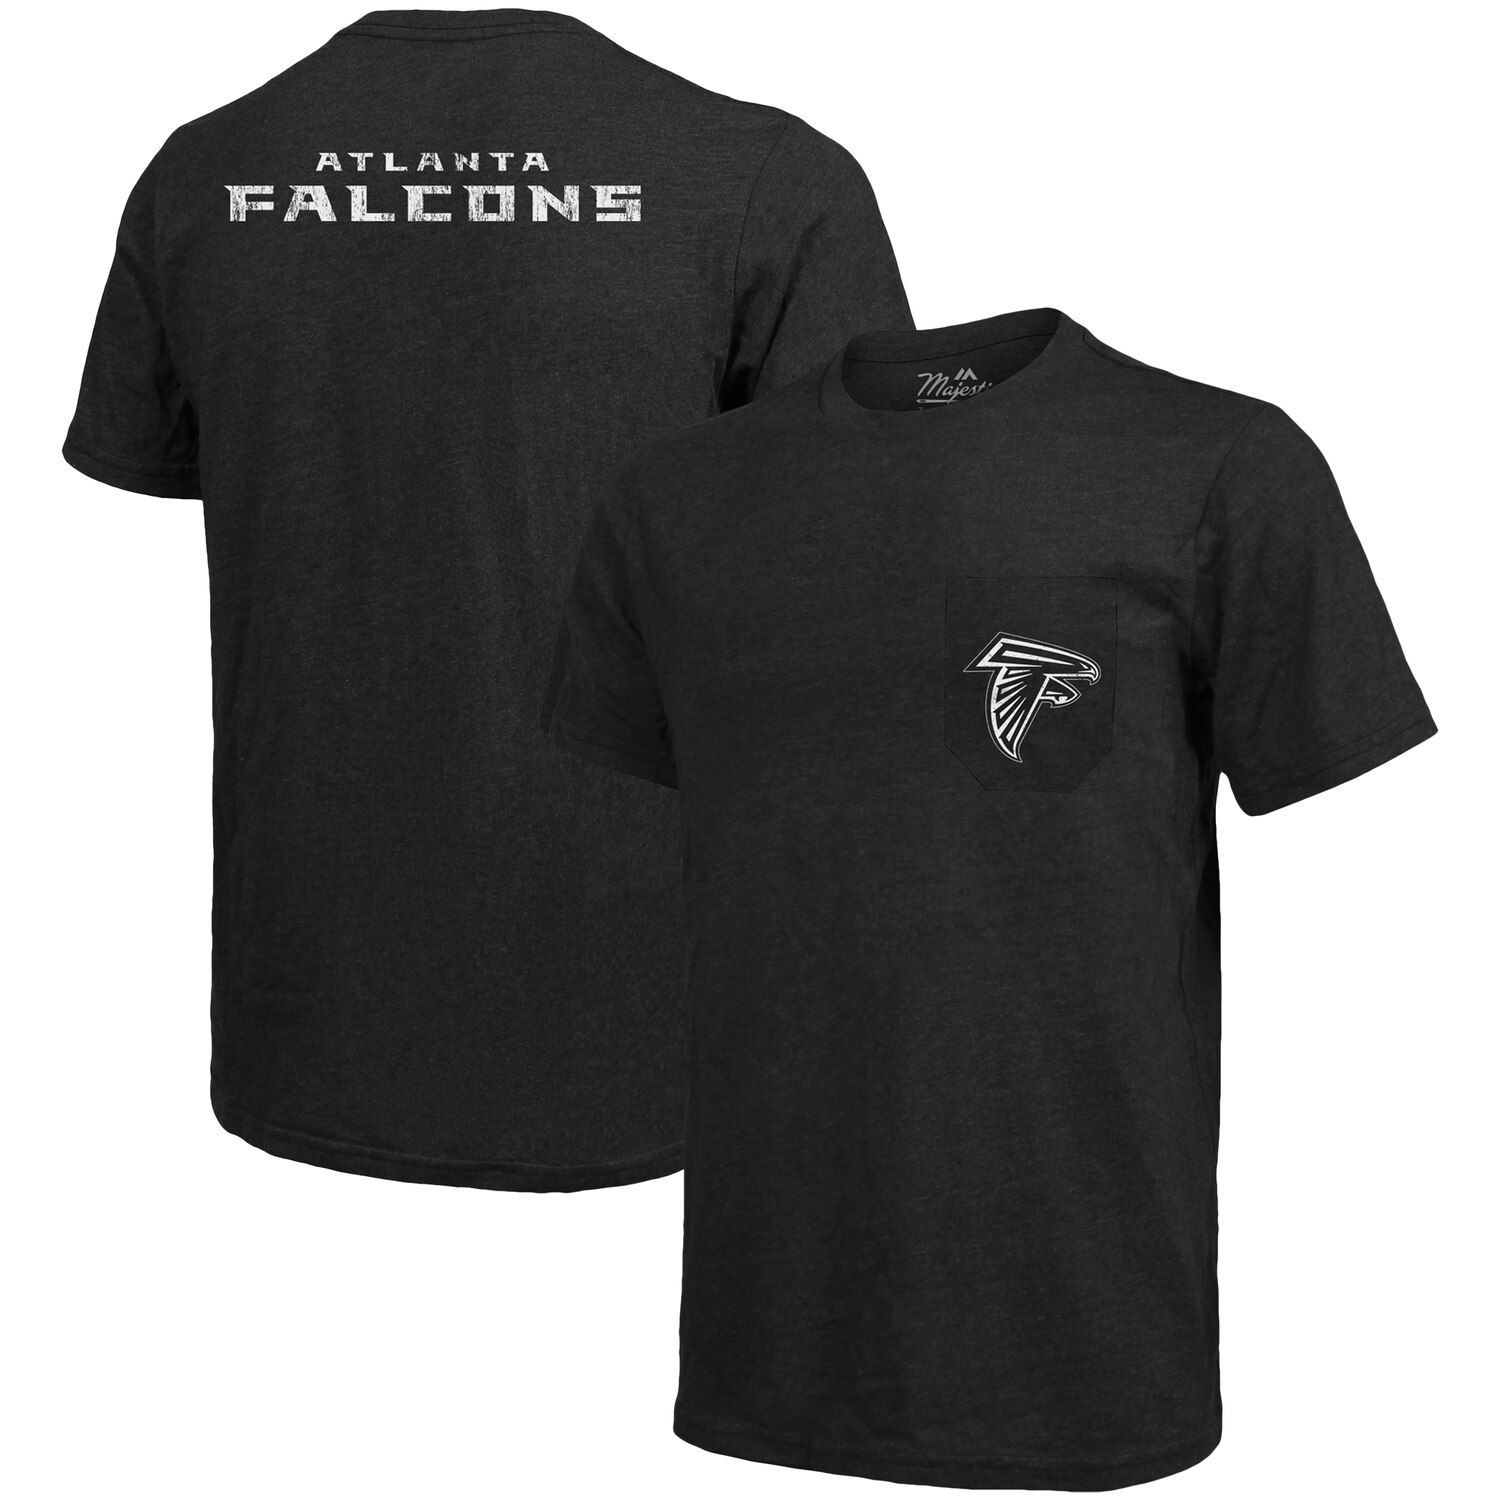 Футболка с карманами Tri-Blend Atlanta Falcons Threads - черный Majestic футболка с карманами tri blend threads detroit lions синяя majestic